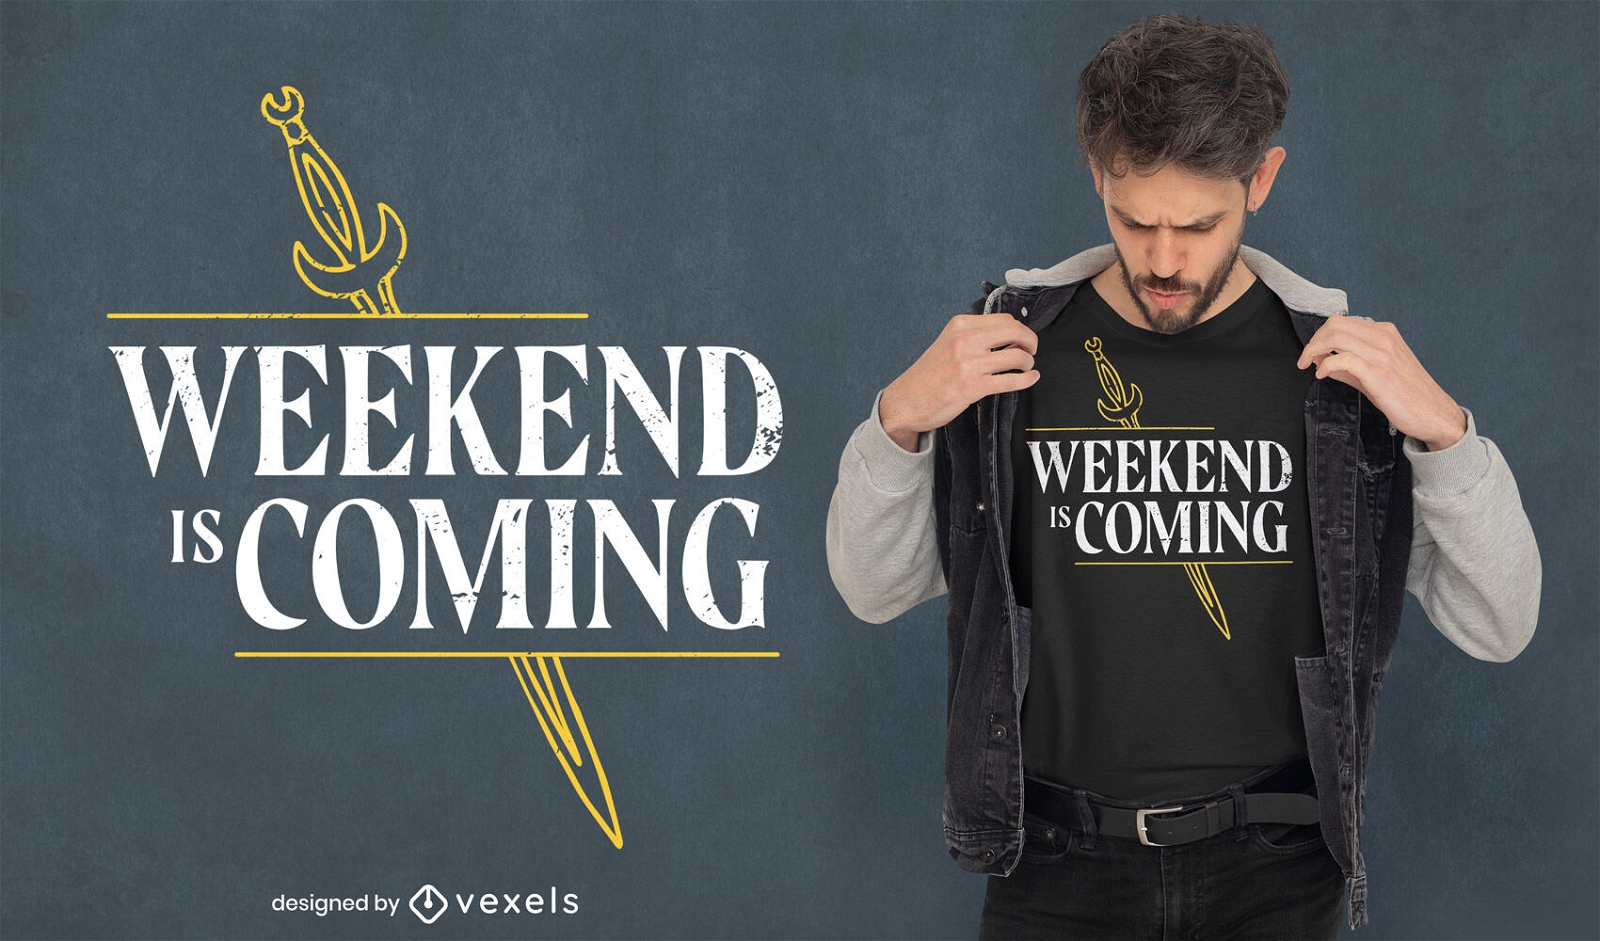 Se acerca el fin de semana dise?o de camiseta de espada